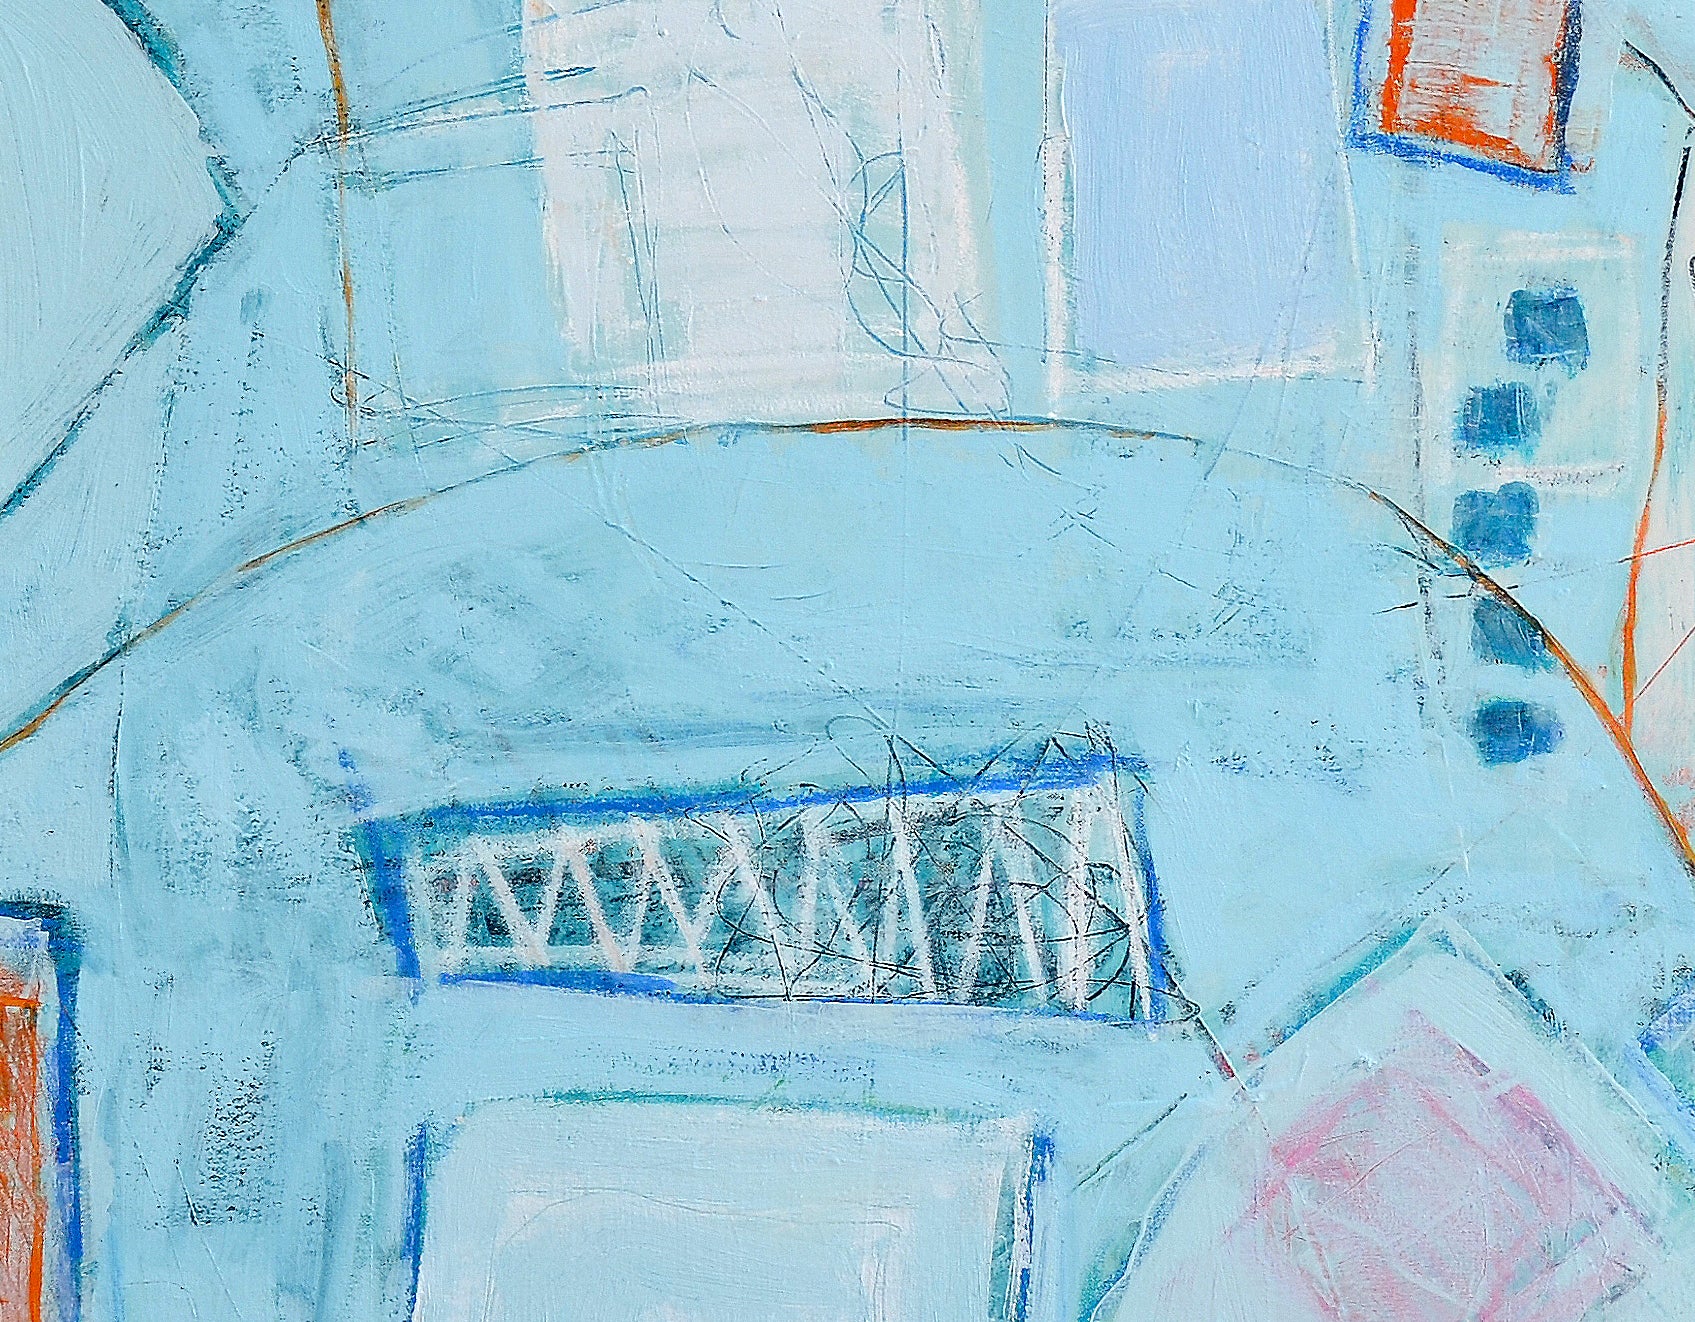 Abstract Art: Bridge Over Blue Water